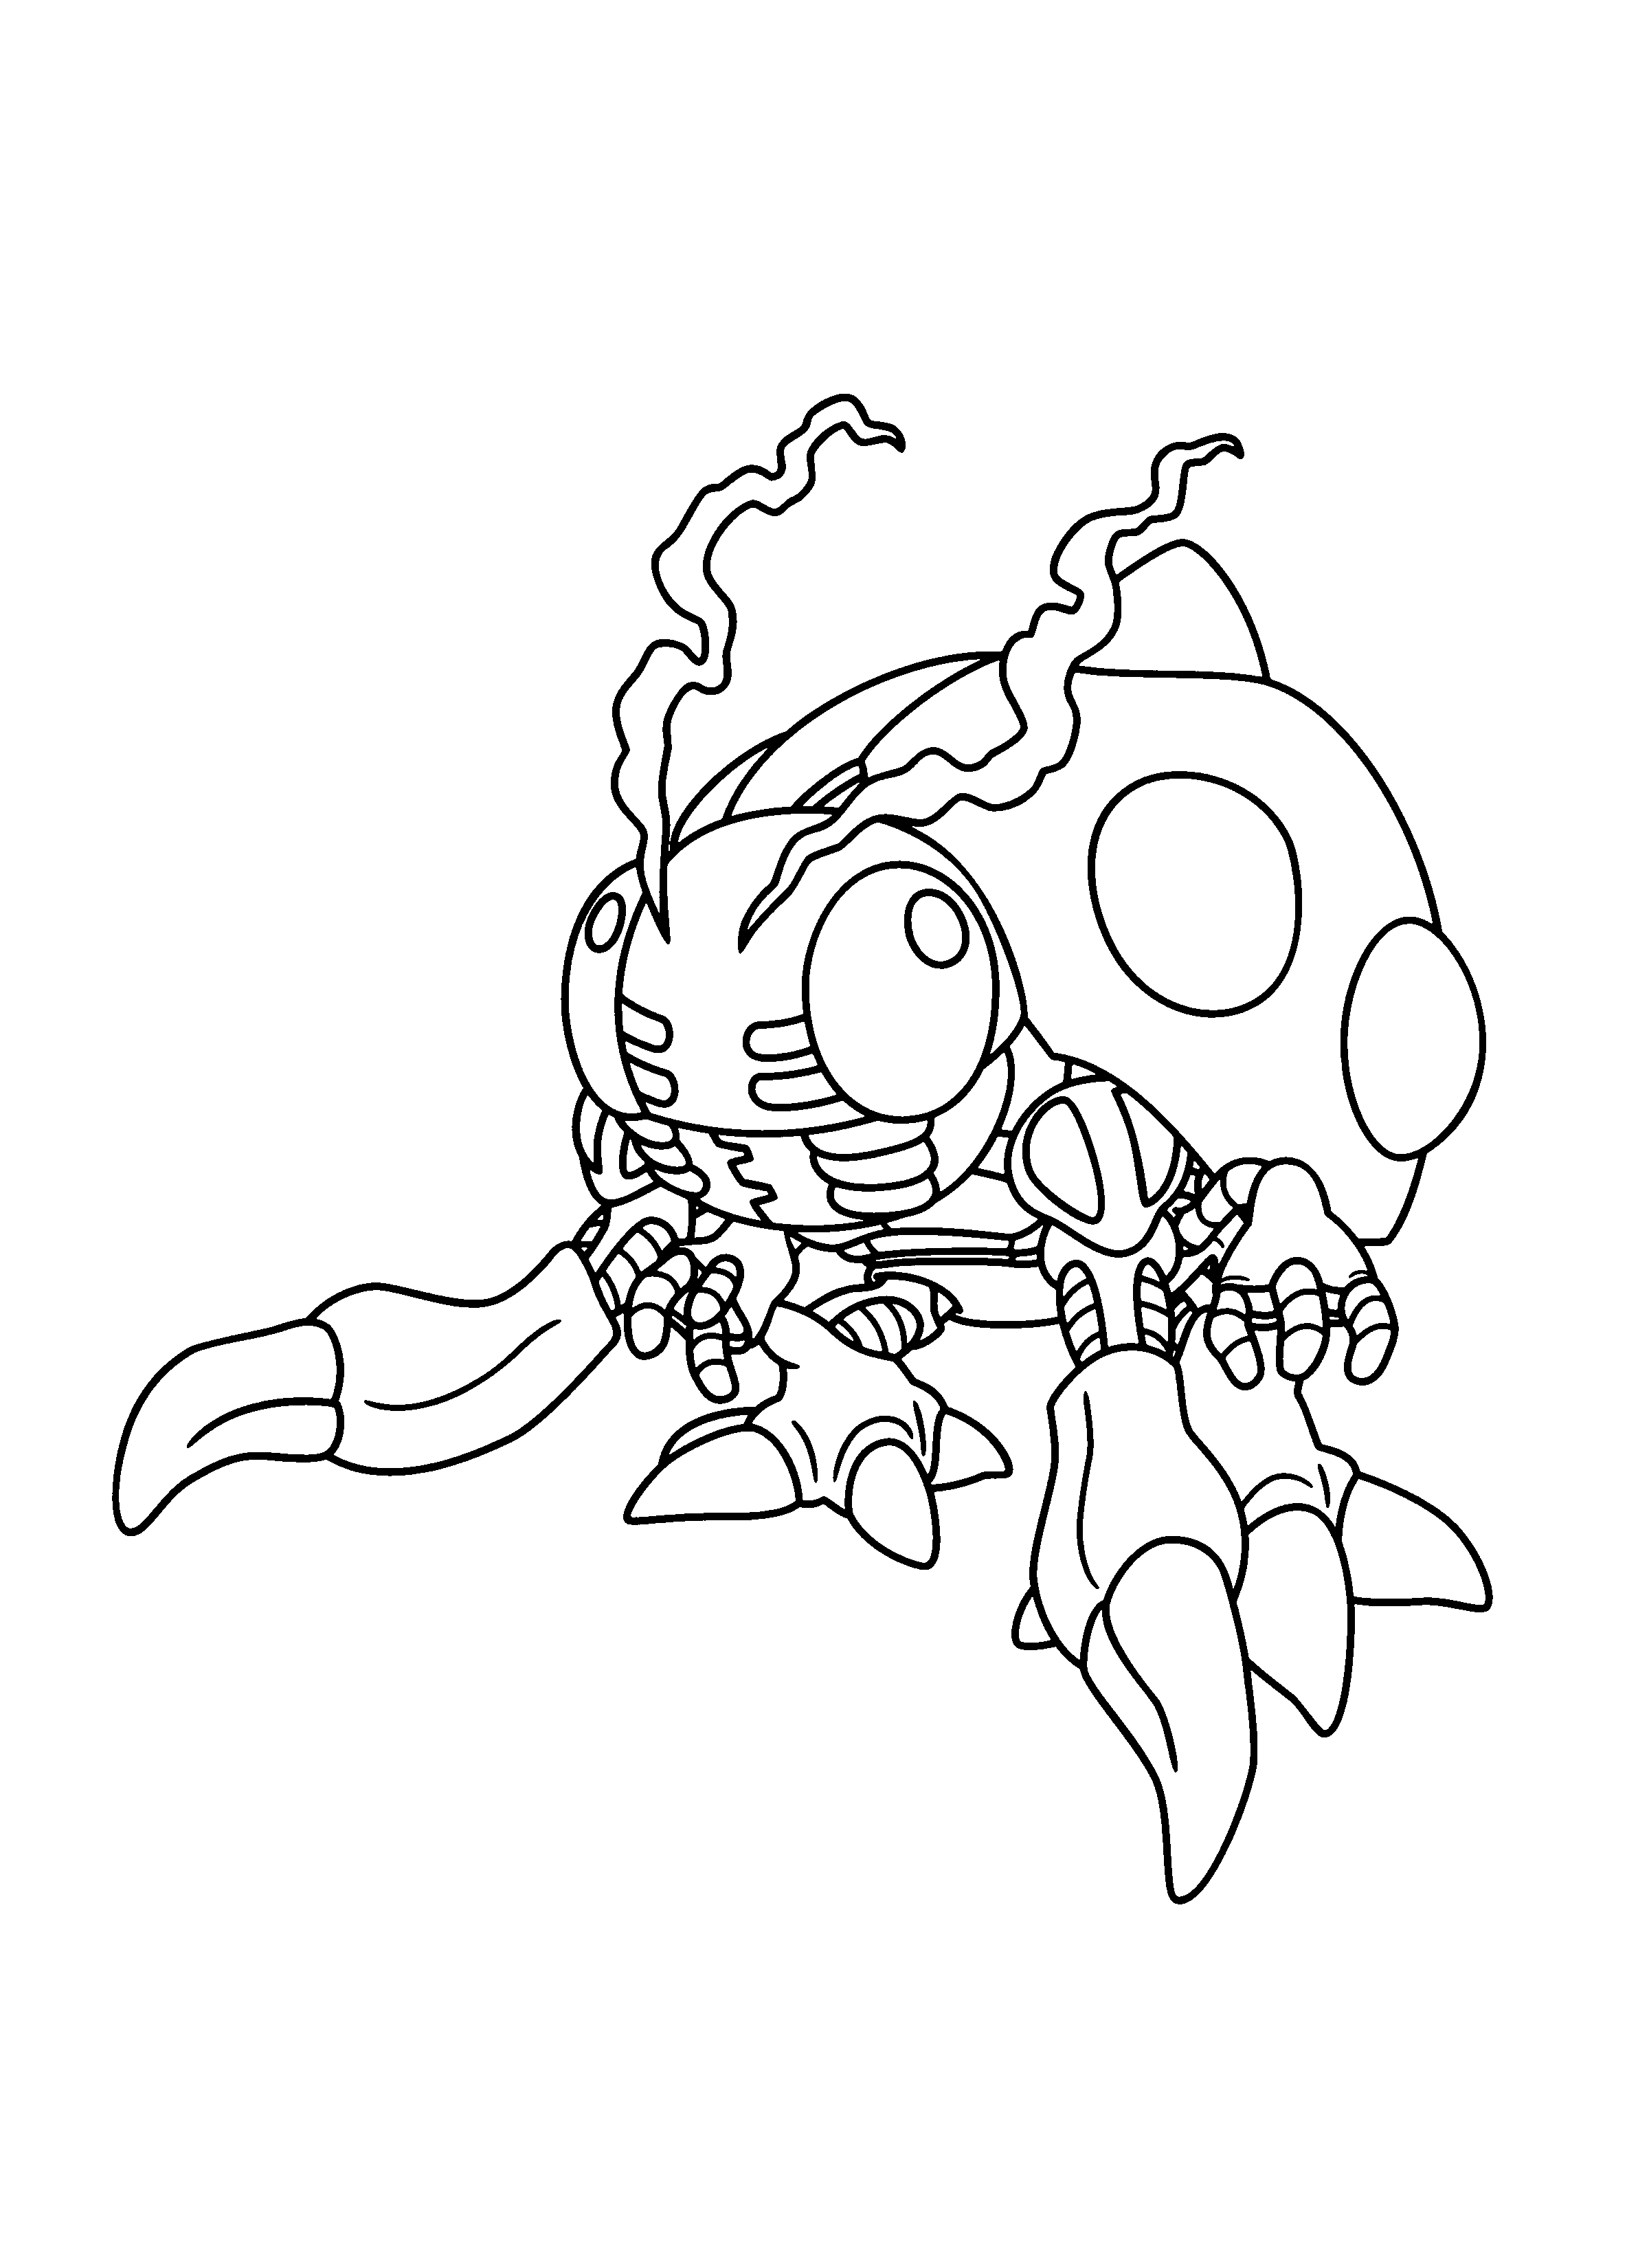 Dibujo para colorear: Digimon (Dibujos animados) #51460 - Dibujos para Colorear e Imprimir Gratis